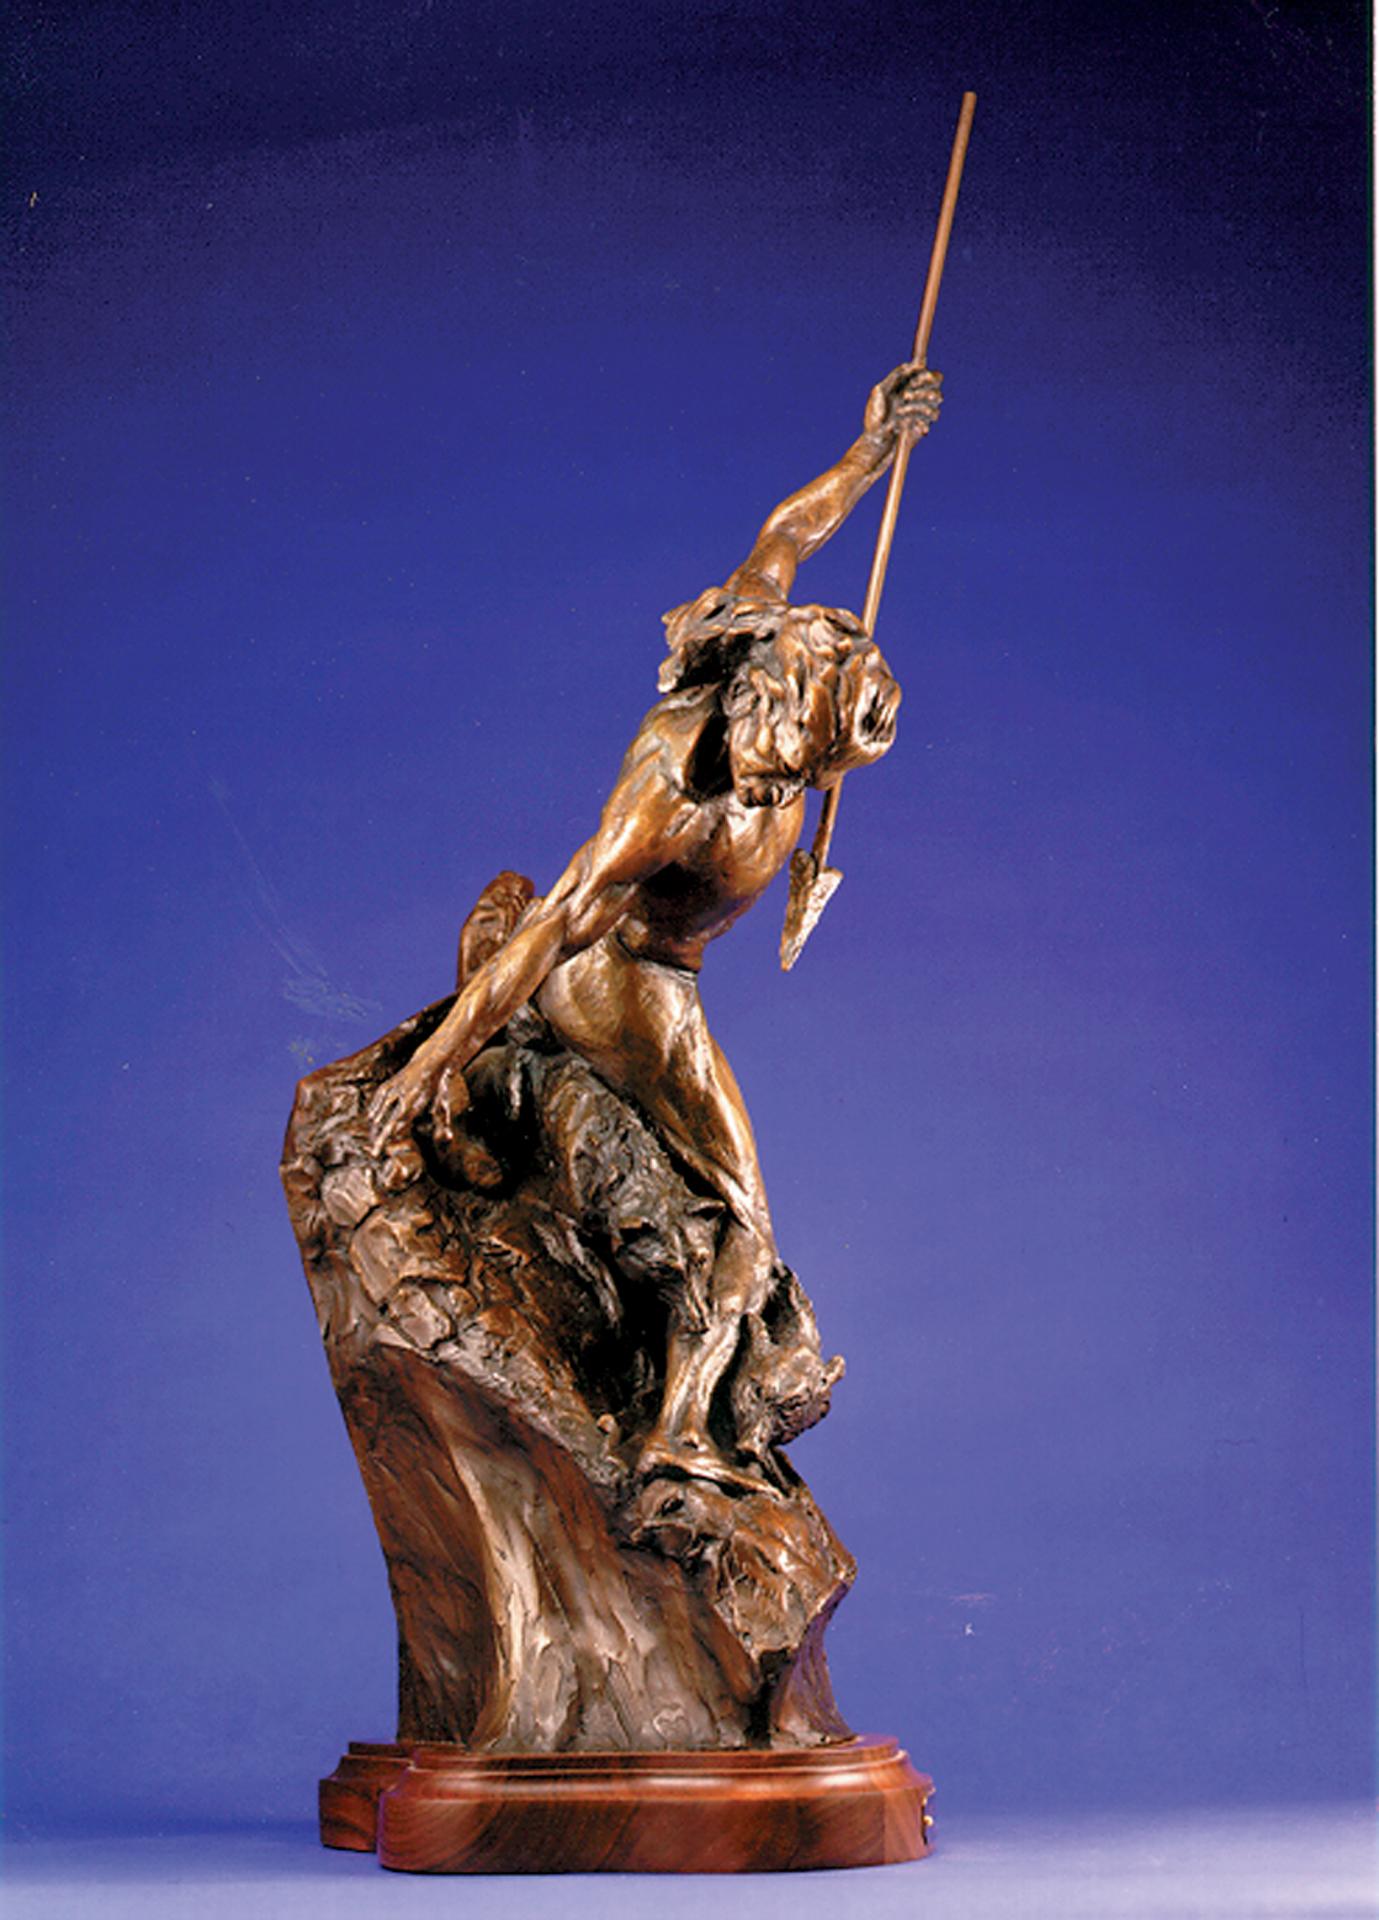 Ancient Defender - Sculpture by Denny Haskew